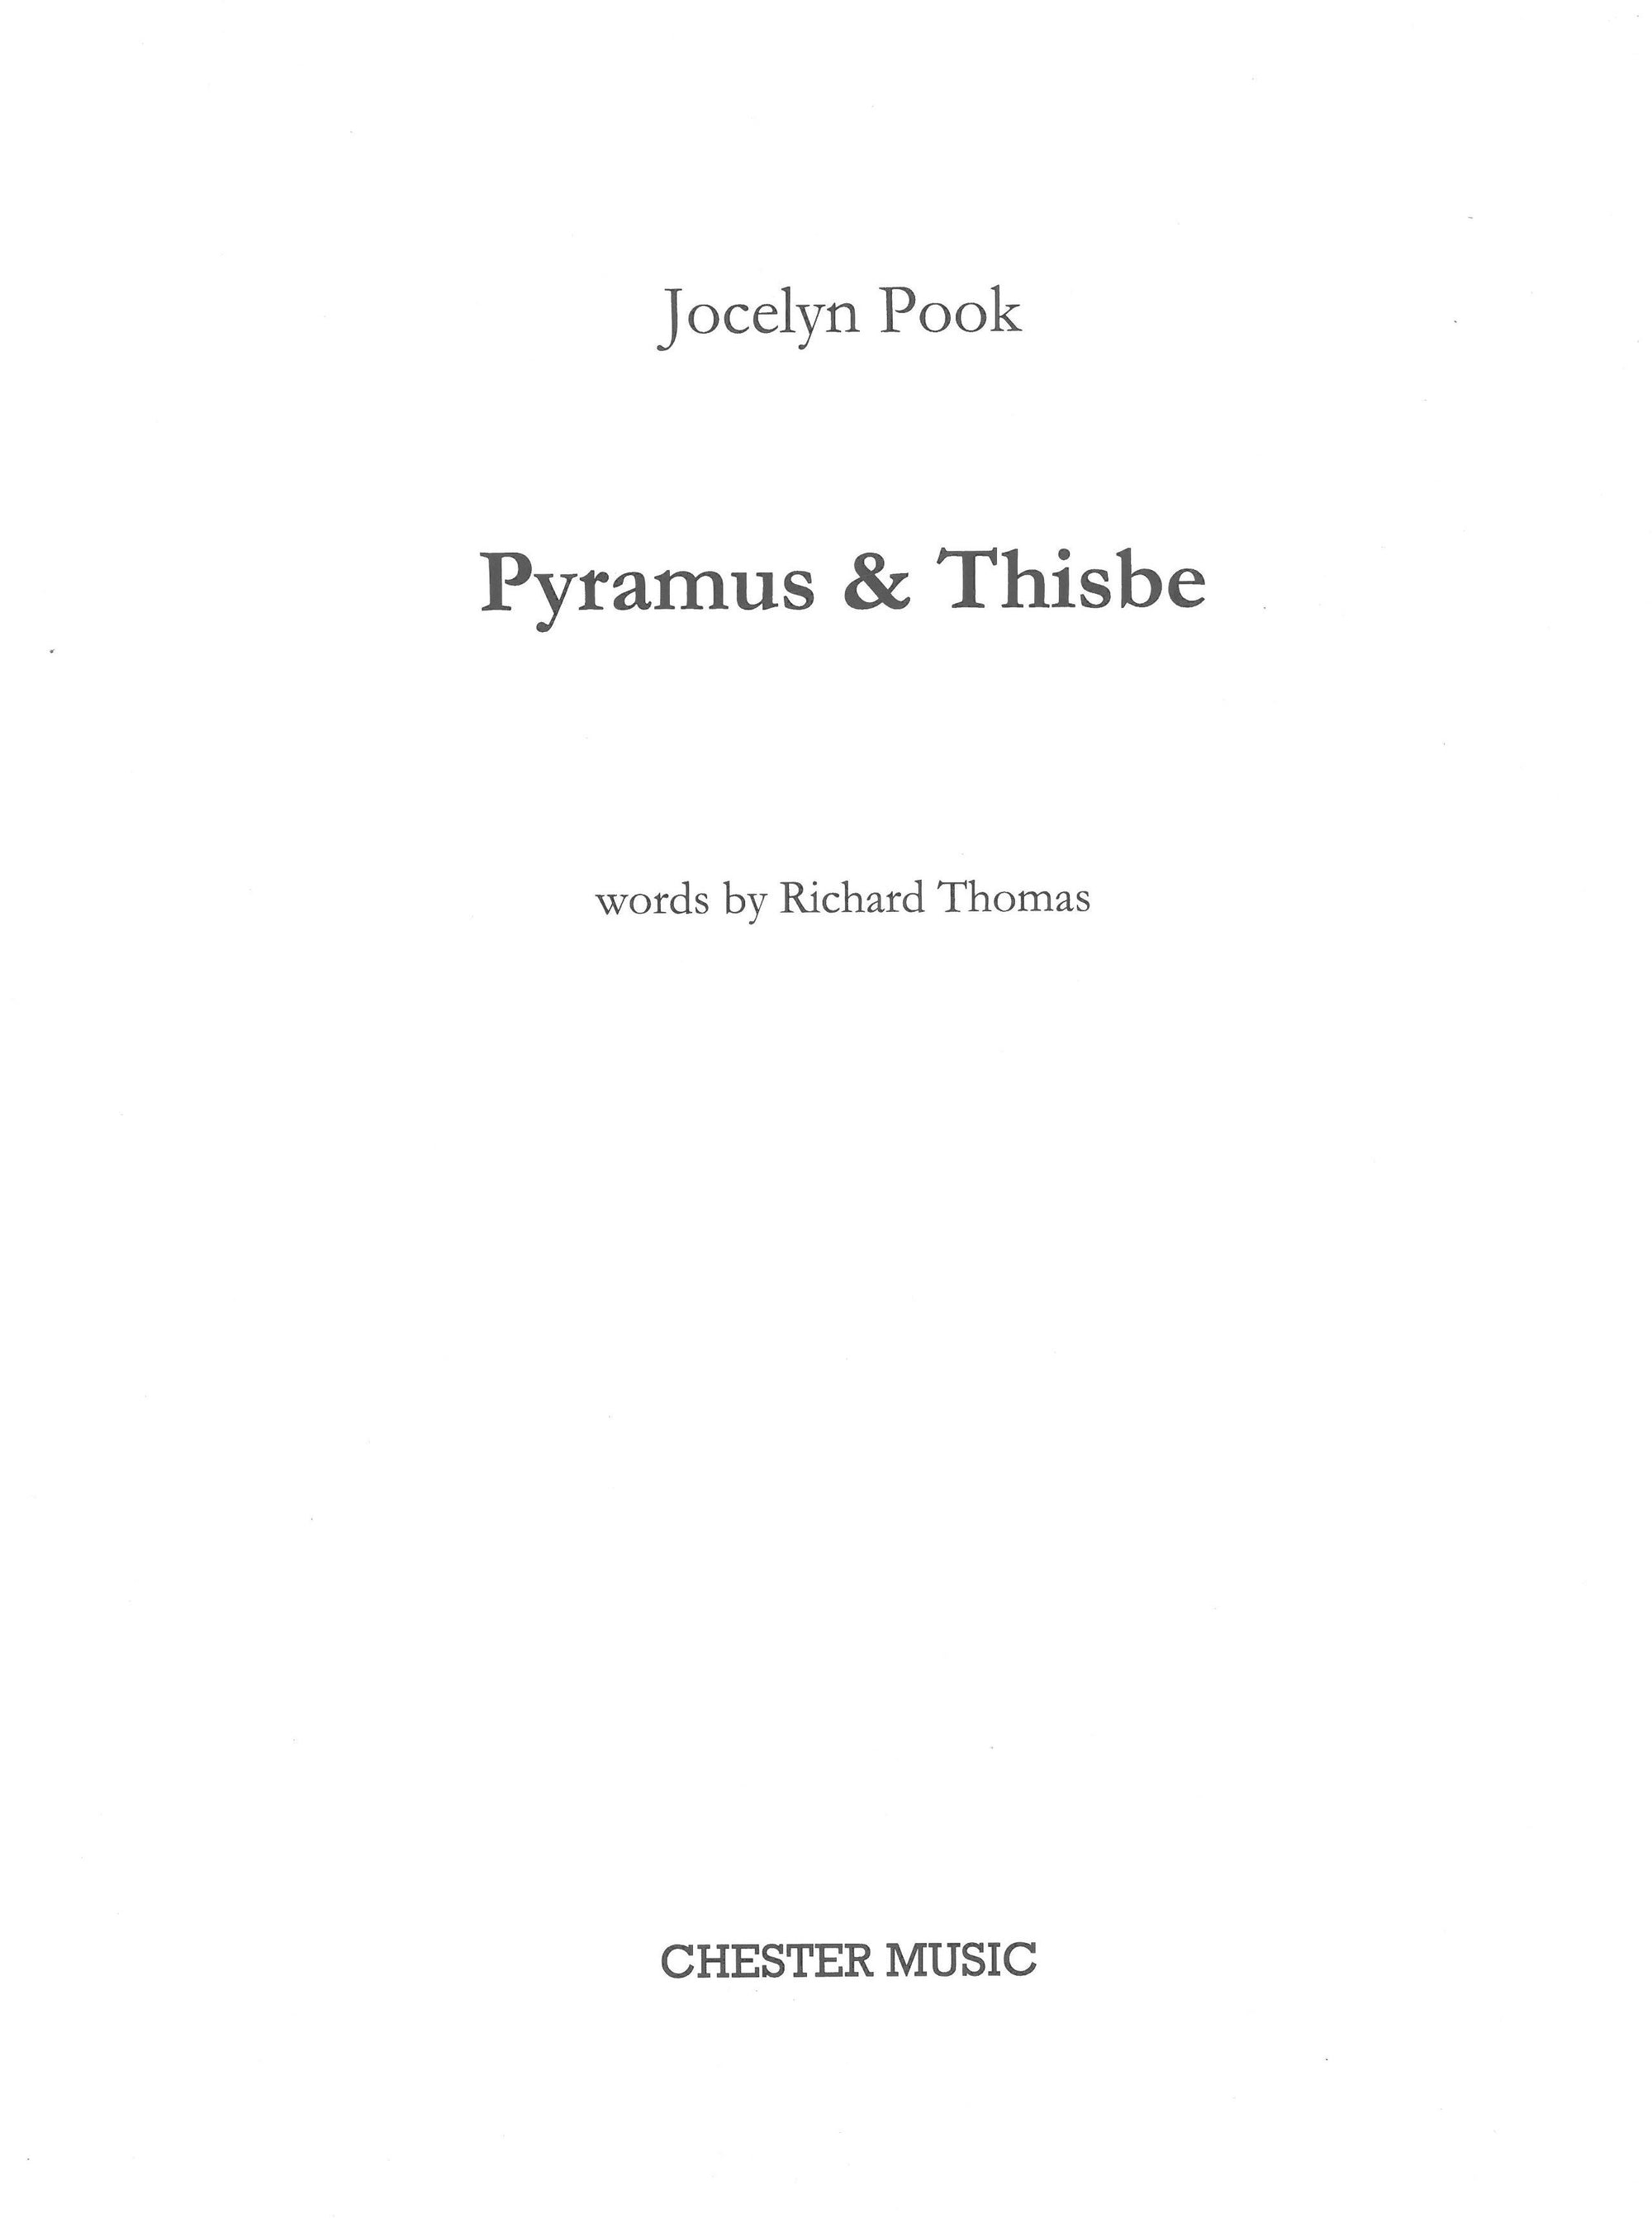 Pook: Pyramus & Thisbe